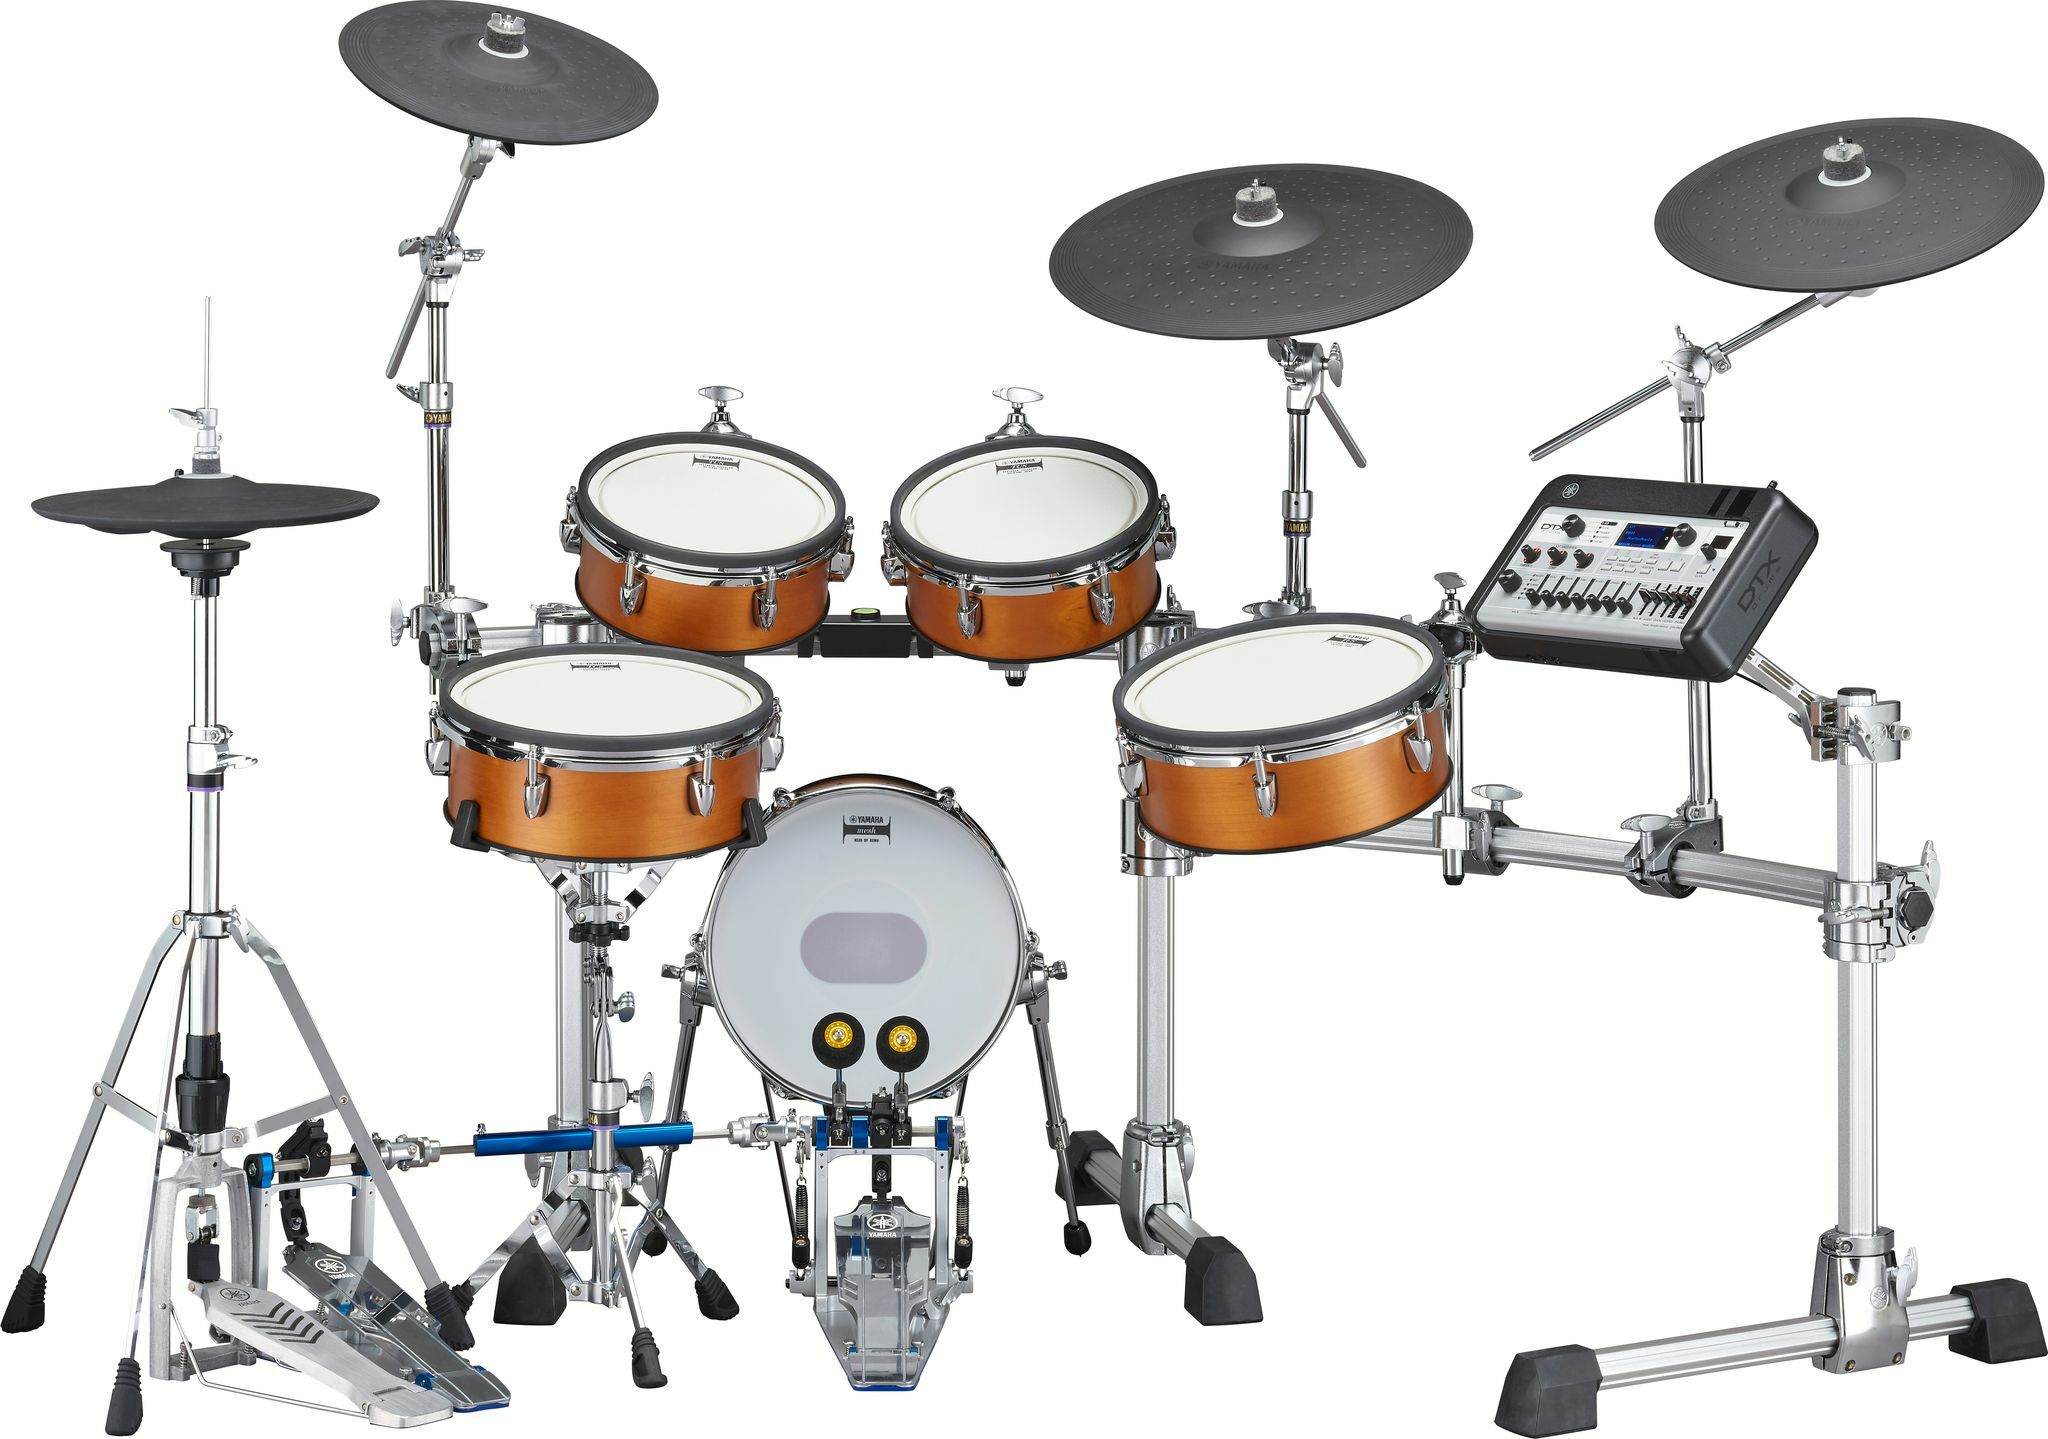 Yamaha Dtx10-kx Electronic Drum Kit Real Wood - Electronic drum kit & set - Main picture